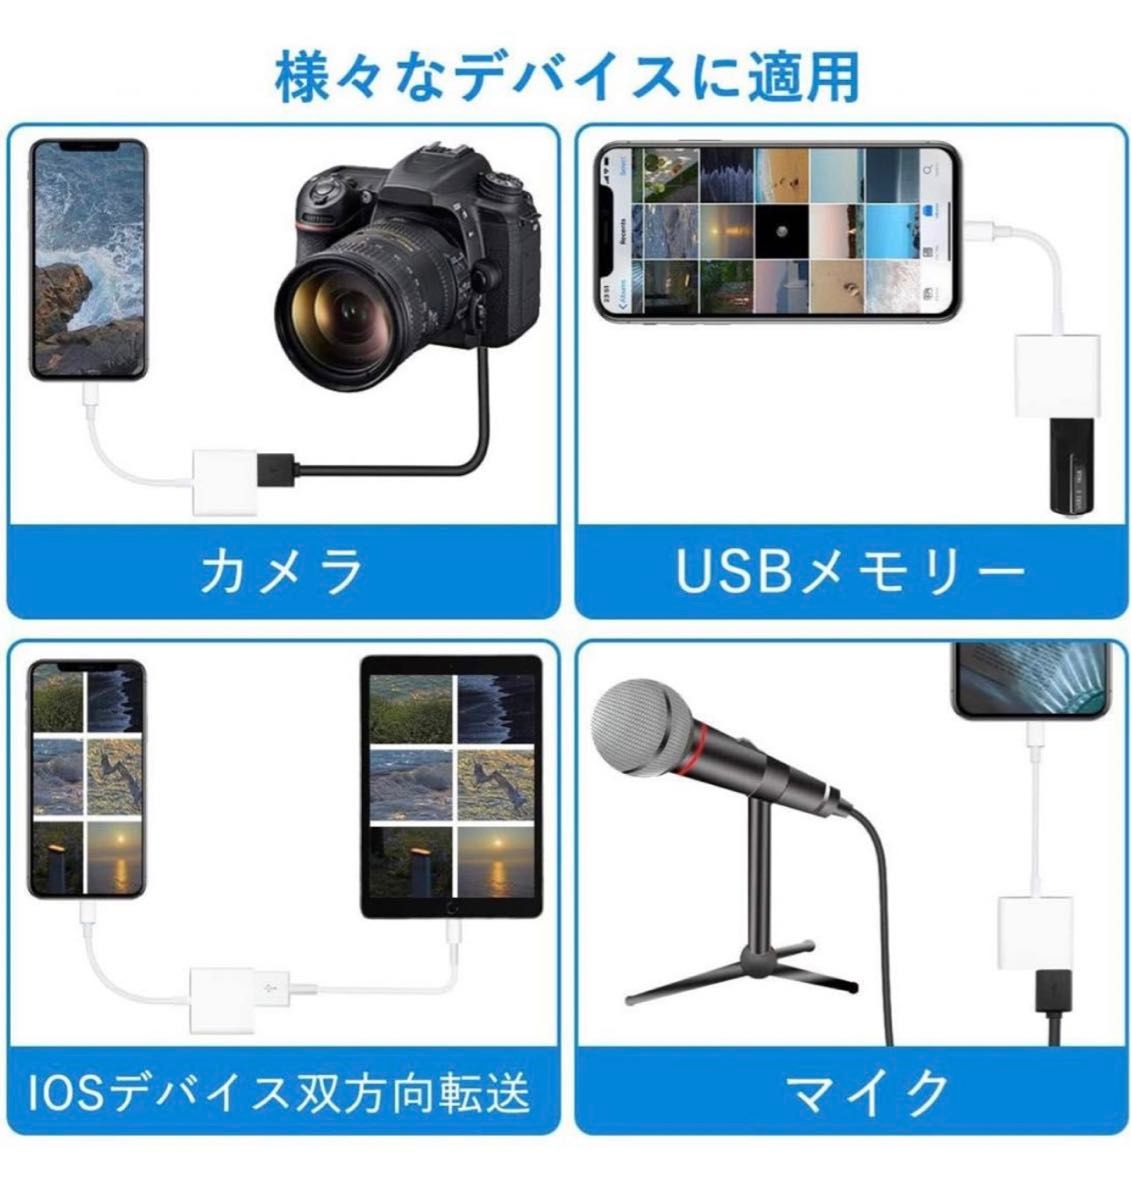 iPhone/iPad USB変換カメラアダプタ 2in1  OTGカメラアダプタ 双方向 急速充電/データ/写真/ビデオ転送